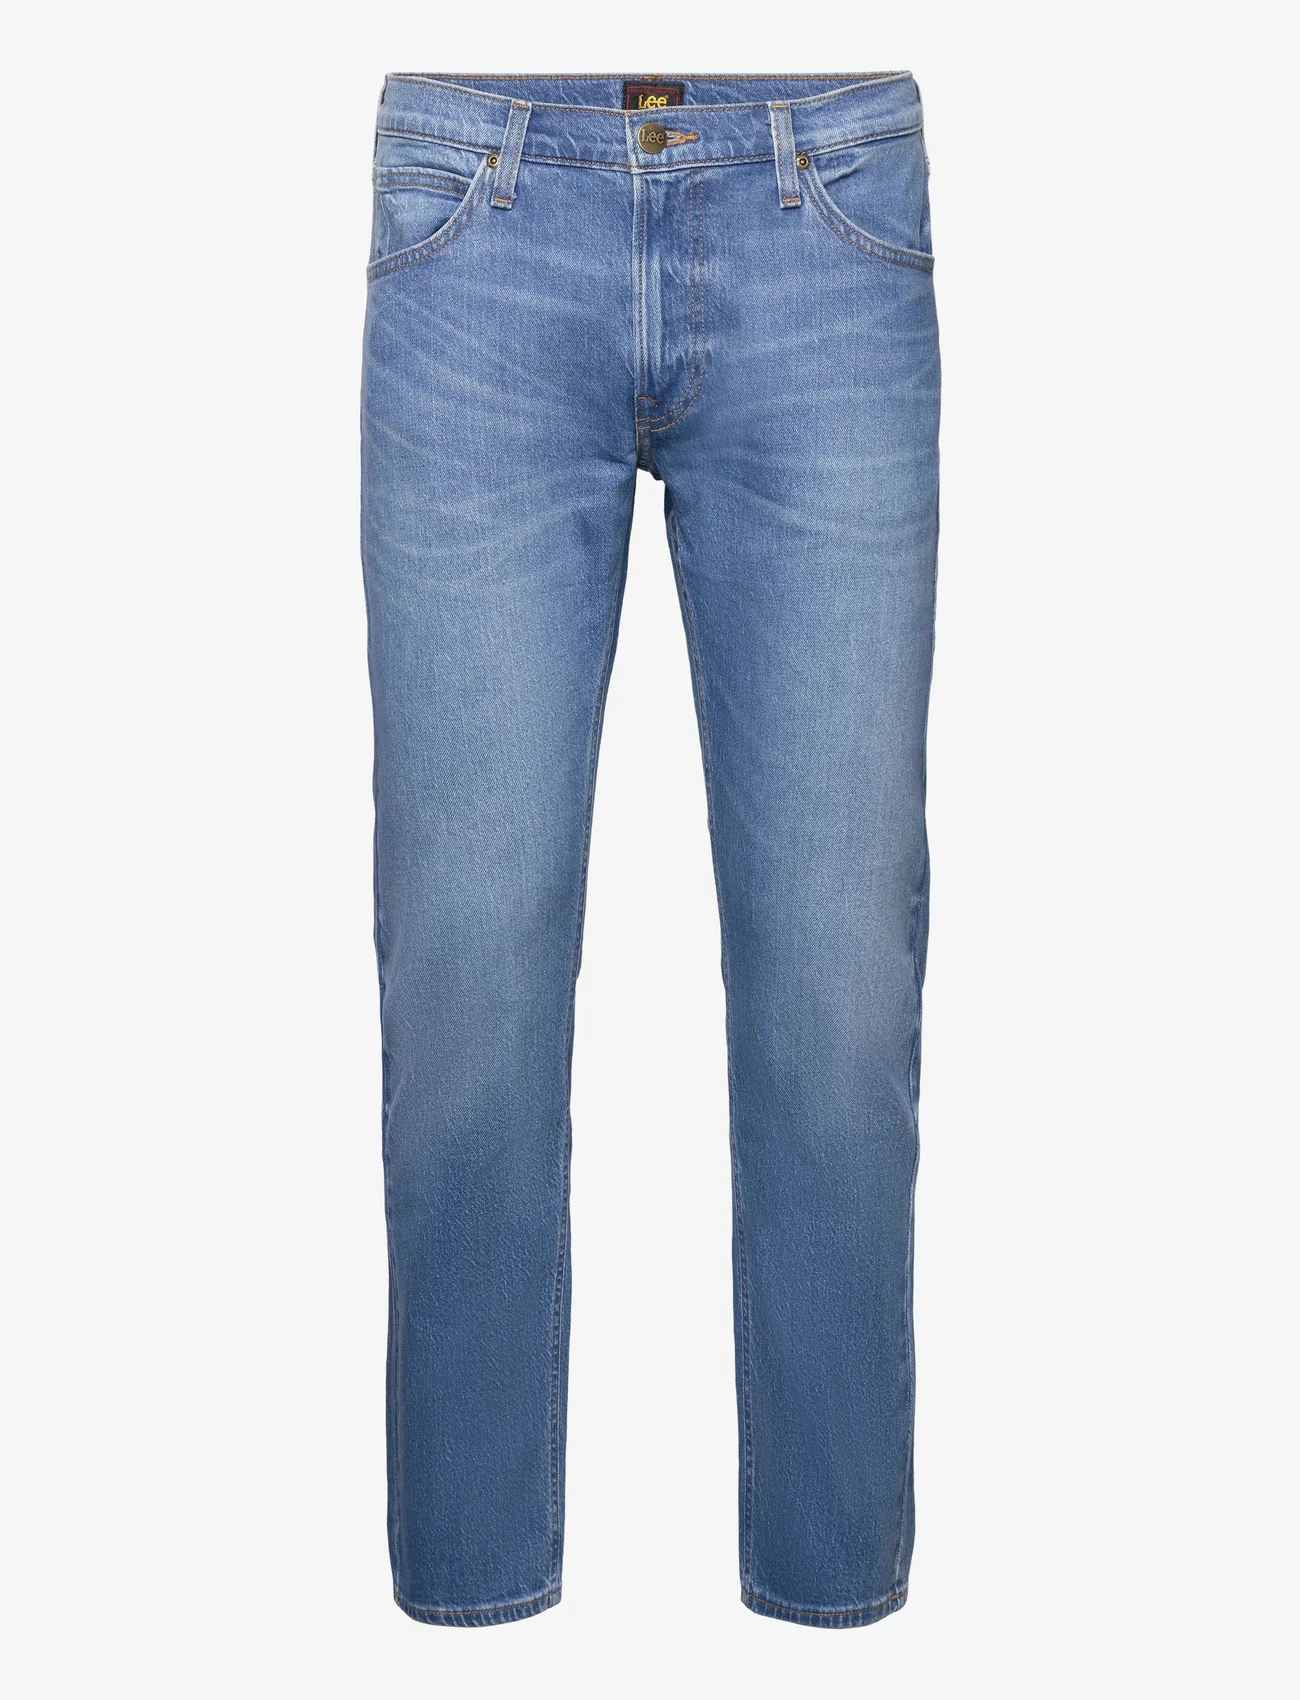 Lee Jeans - DAREN ZIP FLY - Įprasto kirpimo džinsai - indigo vintage - 0